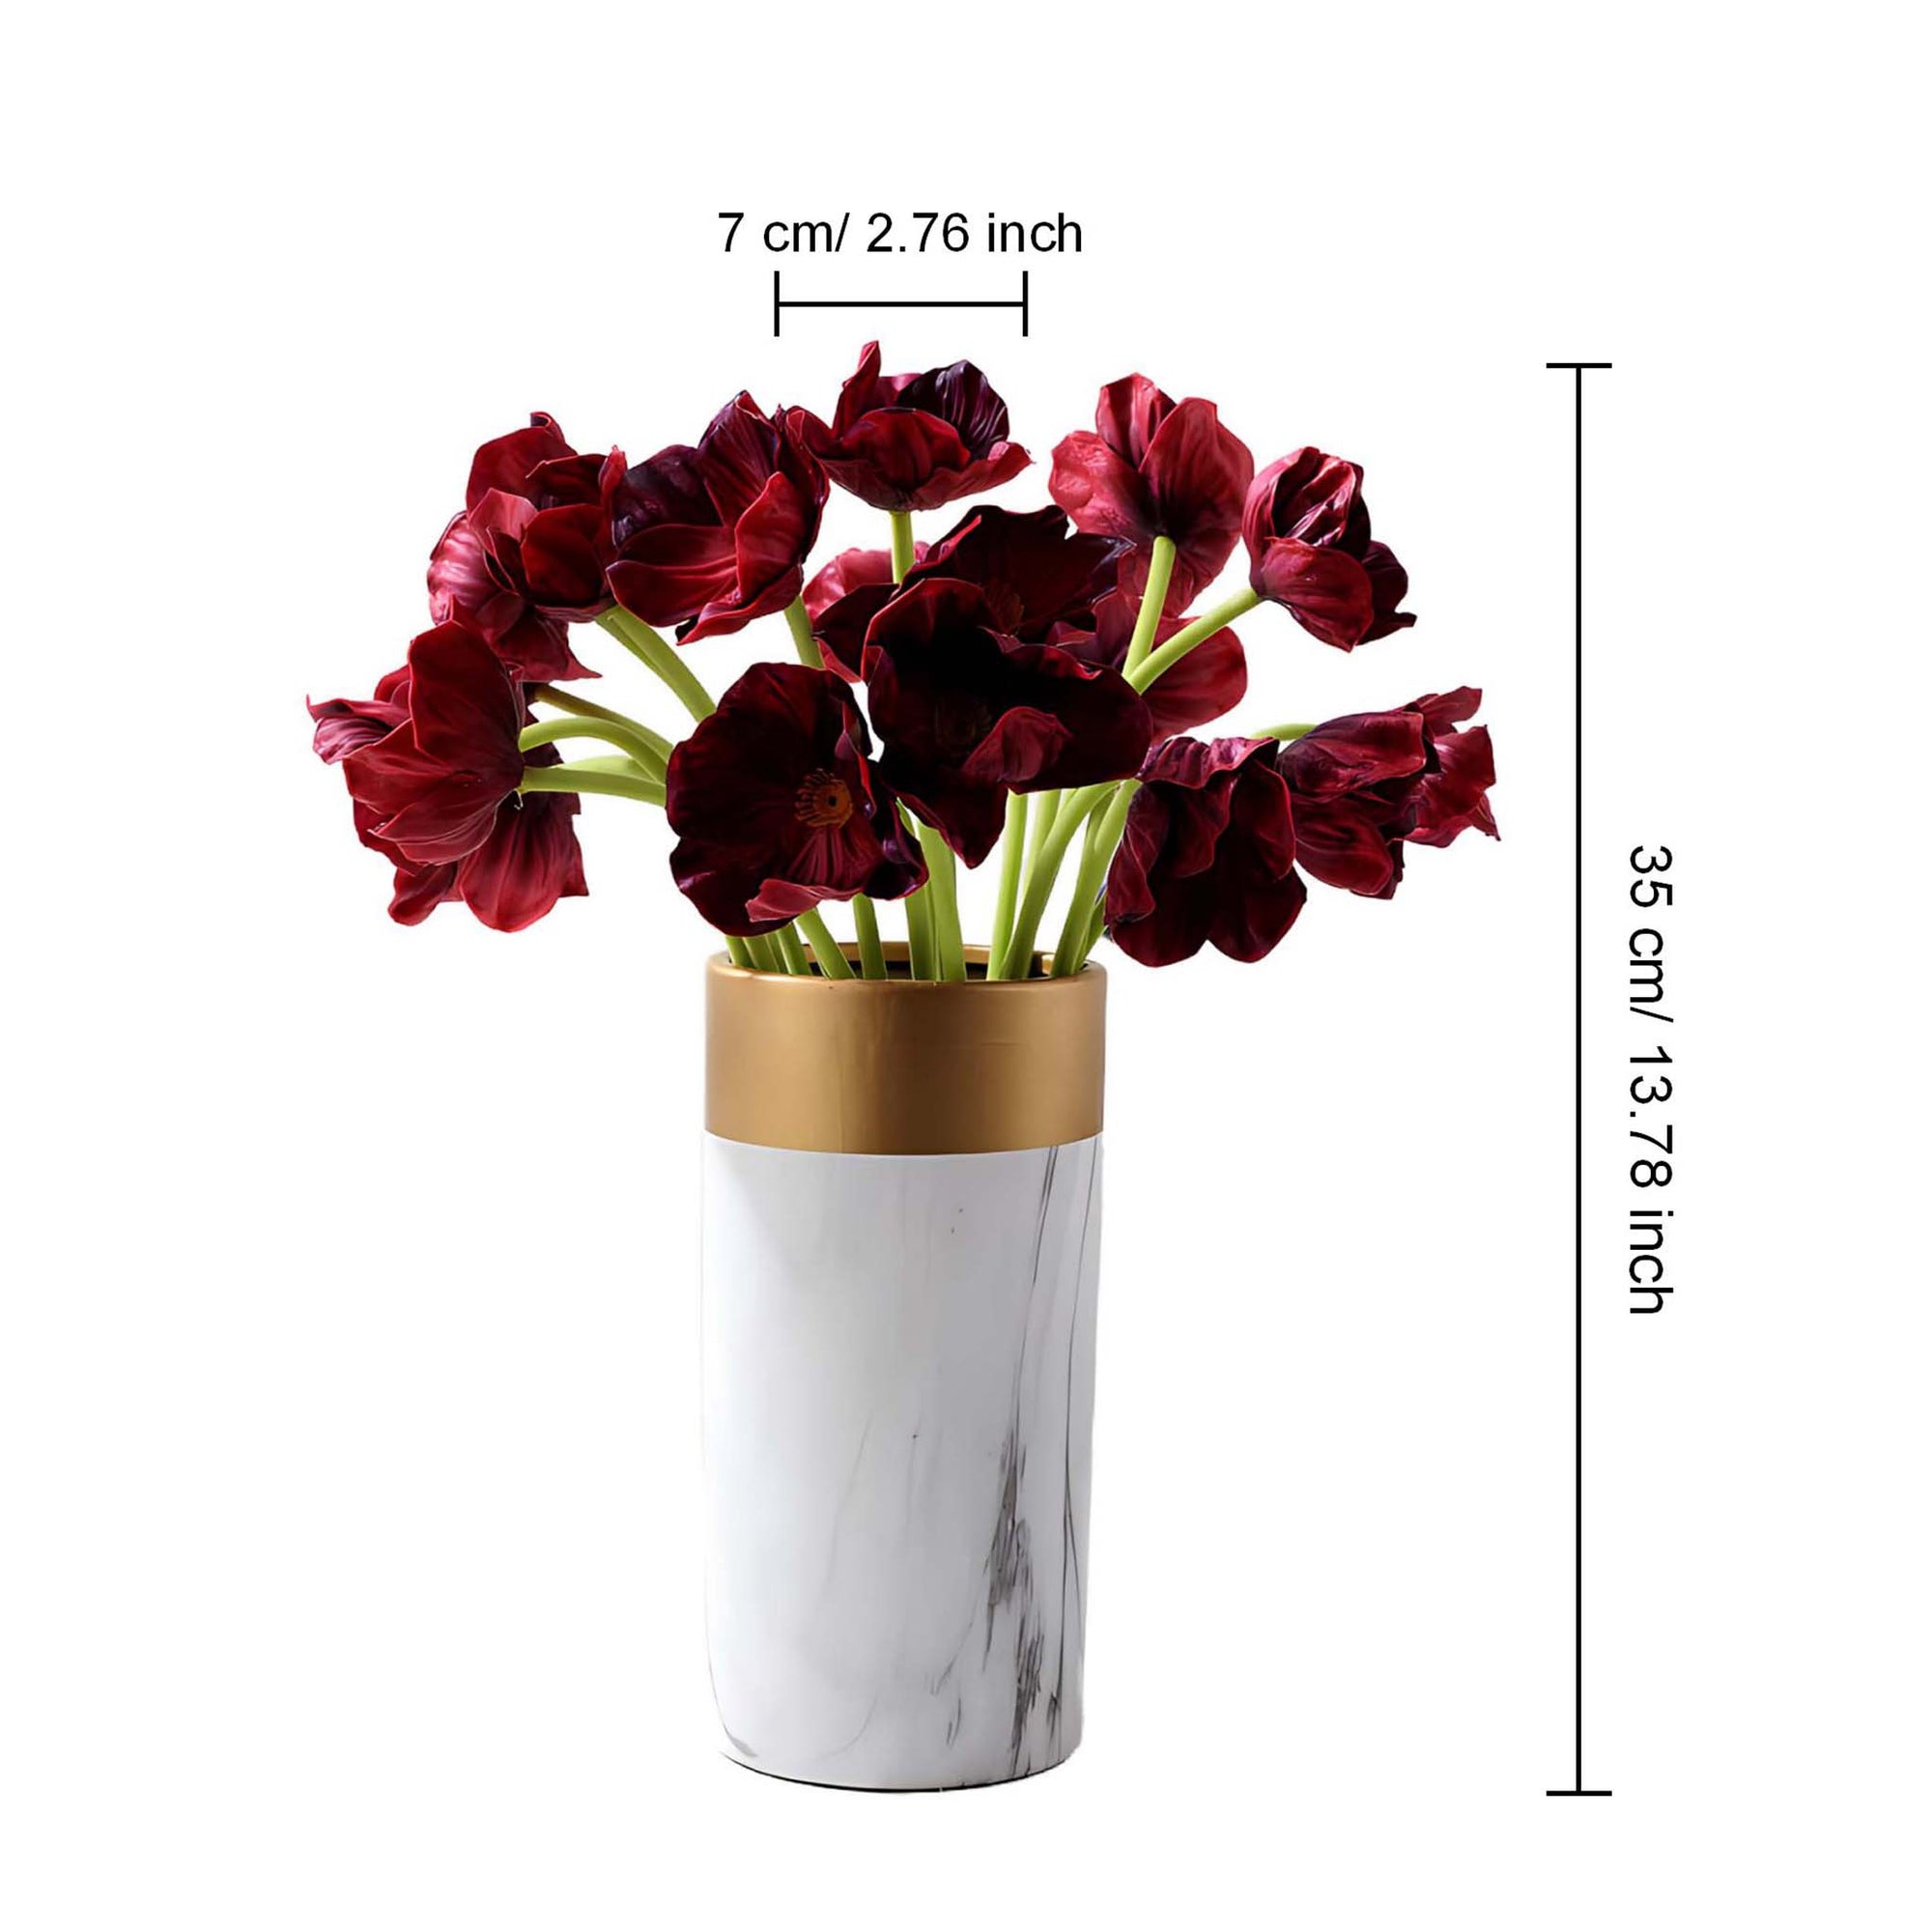 Burgundy Fake Flowers Poppy for Wedding Bouquet Centerpieces